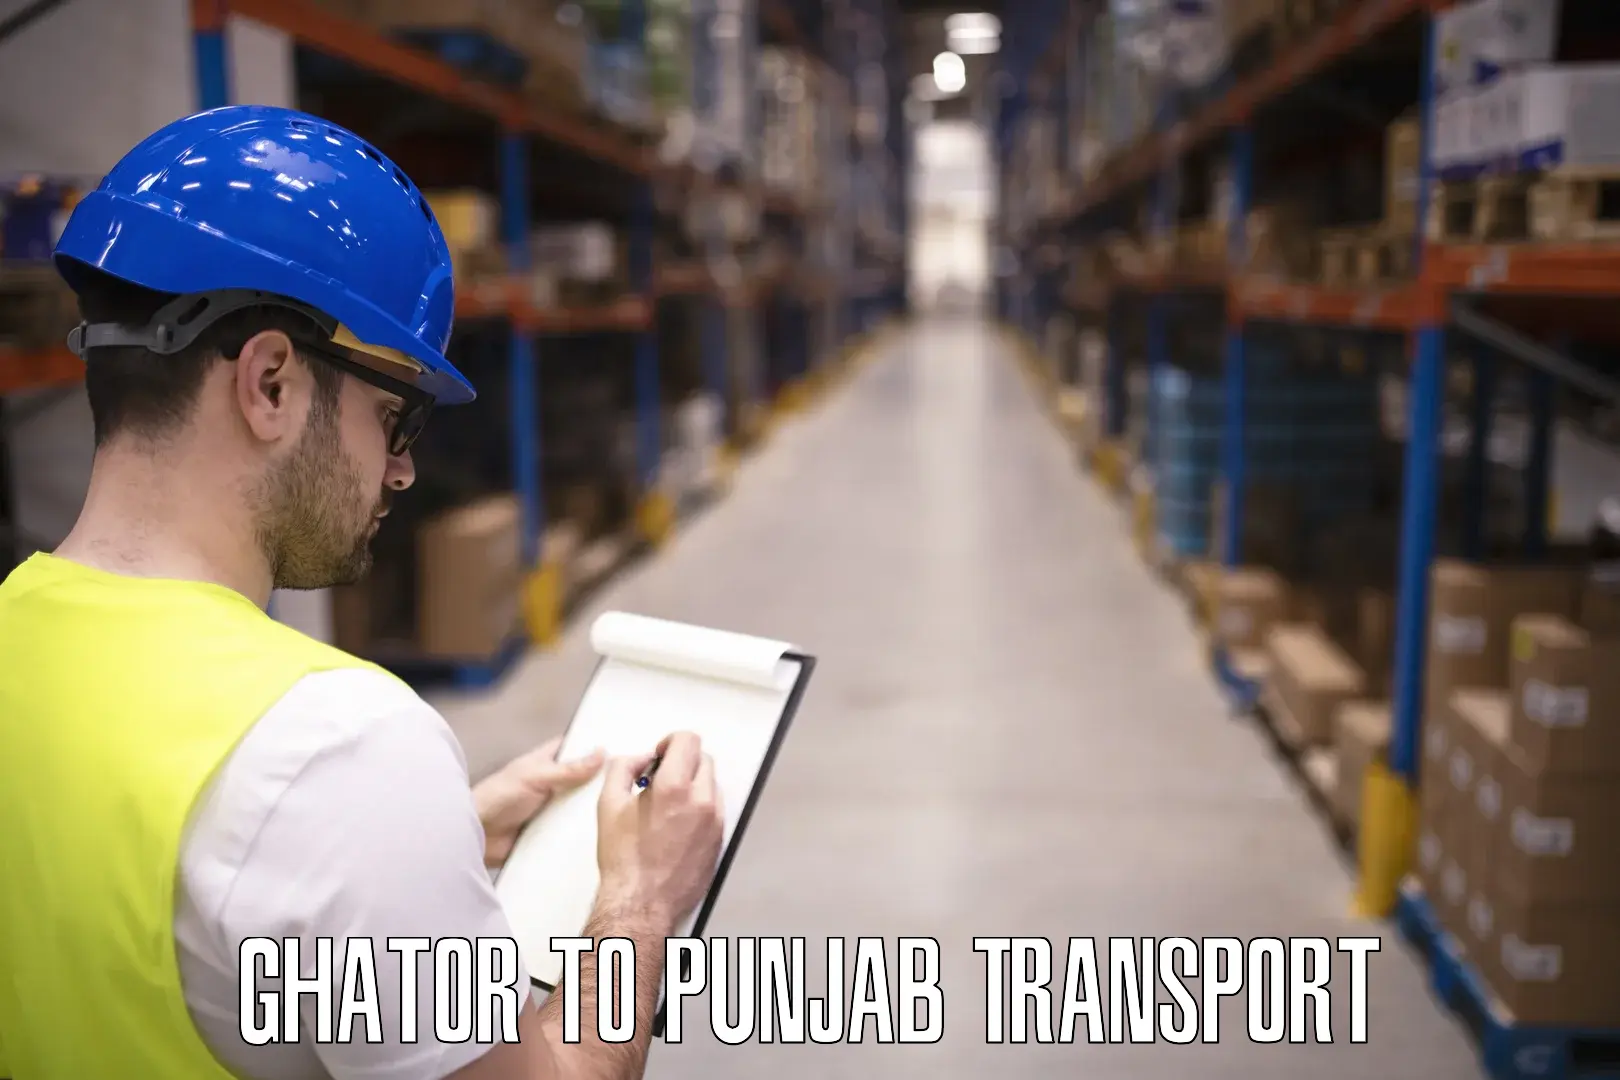 Vehicle parcel service Ghator to Punjab